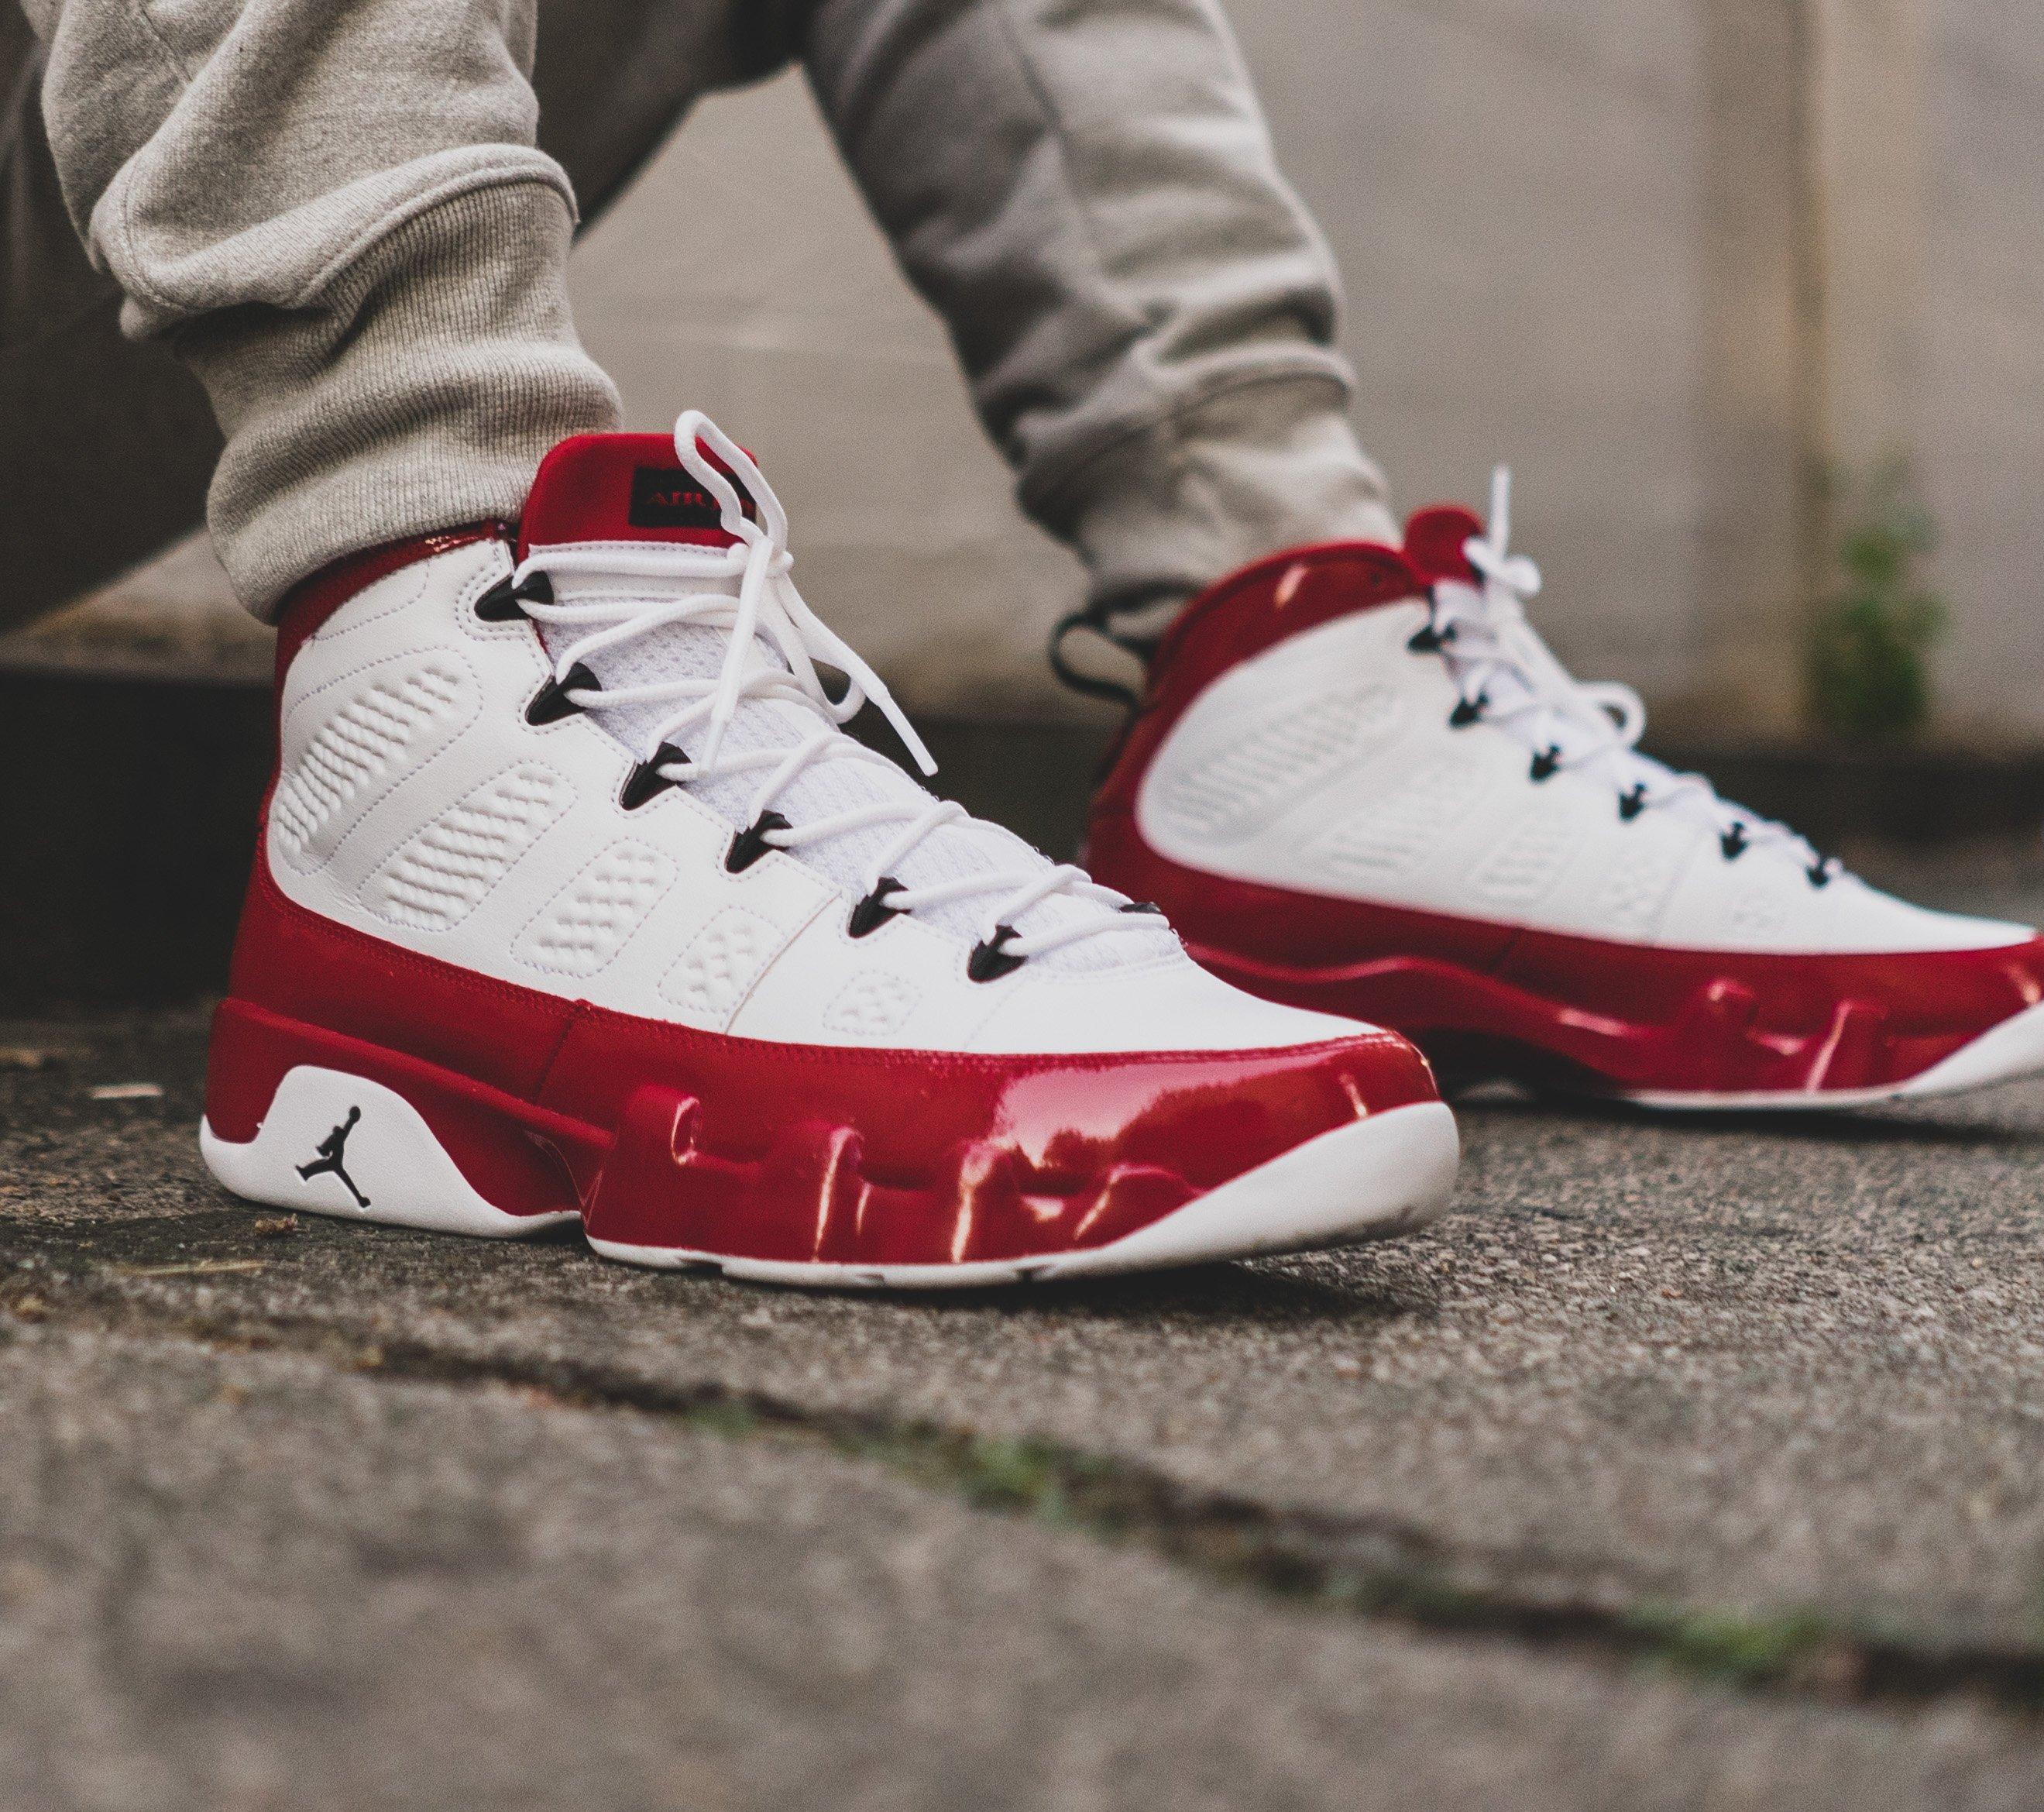 Sneakers Release : Men’s Jordan 9 Retro “White/Black/Gym Red”